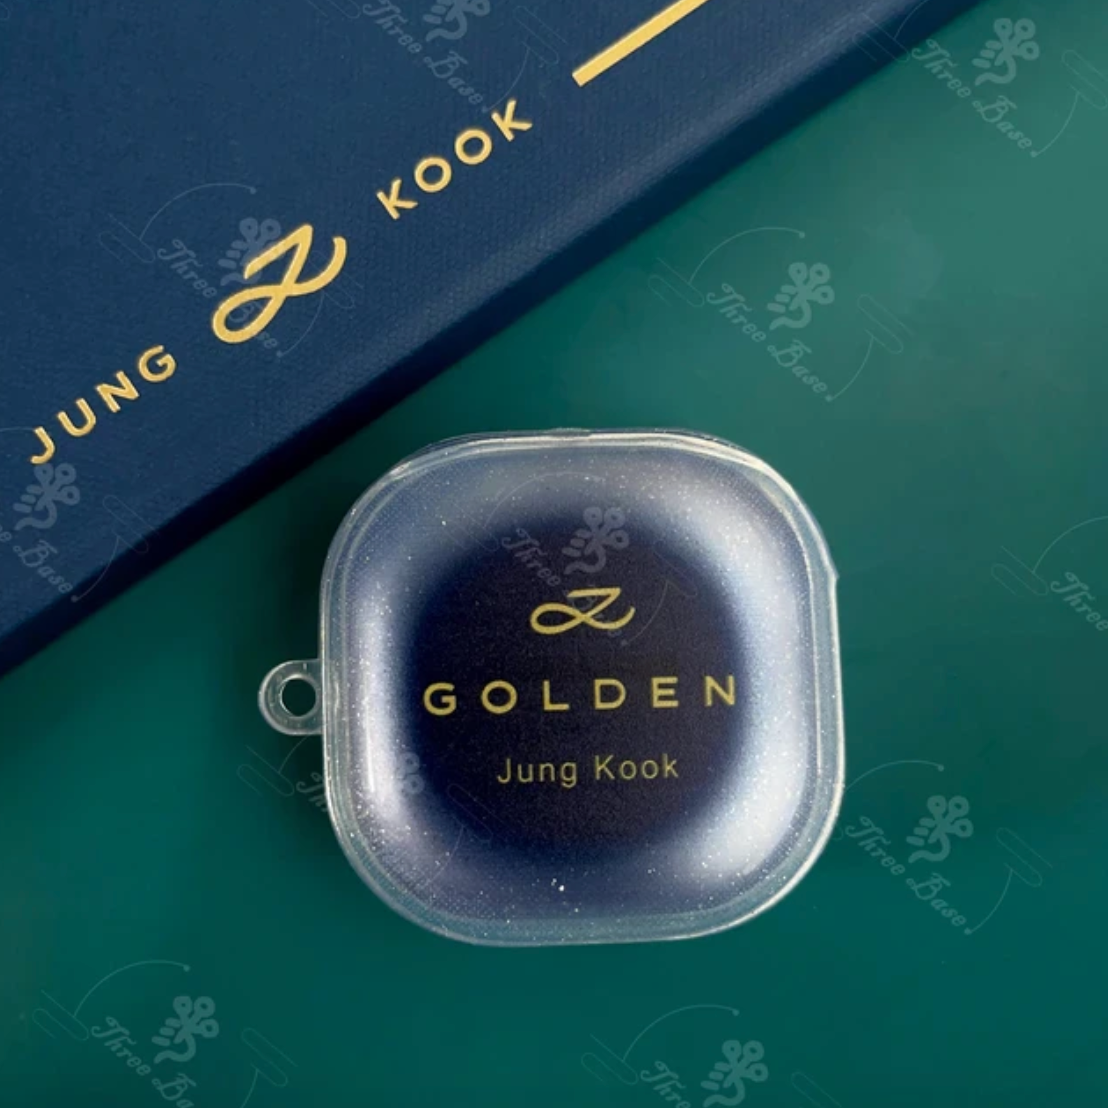 Tsuvishop BTS Jungkook golden samsung buds case bts fan gift kpop earphone Case bts jungkook phone case for iphone airpods samsung keychain